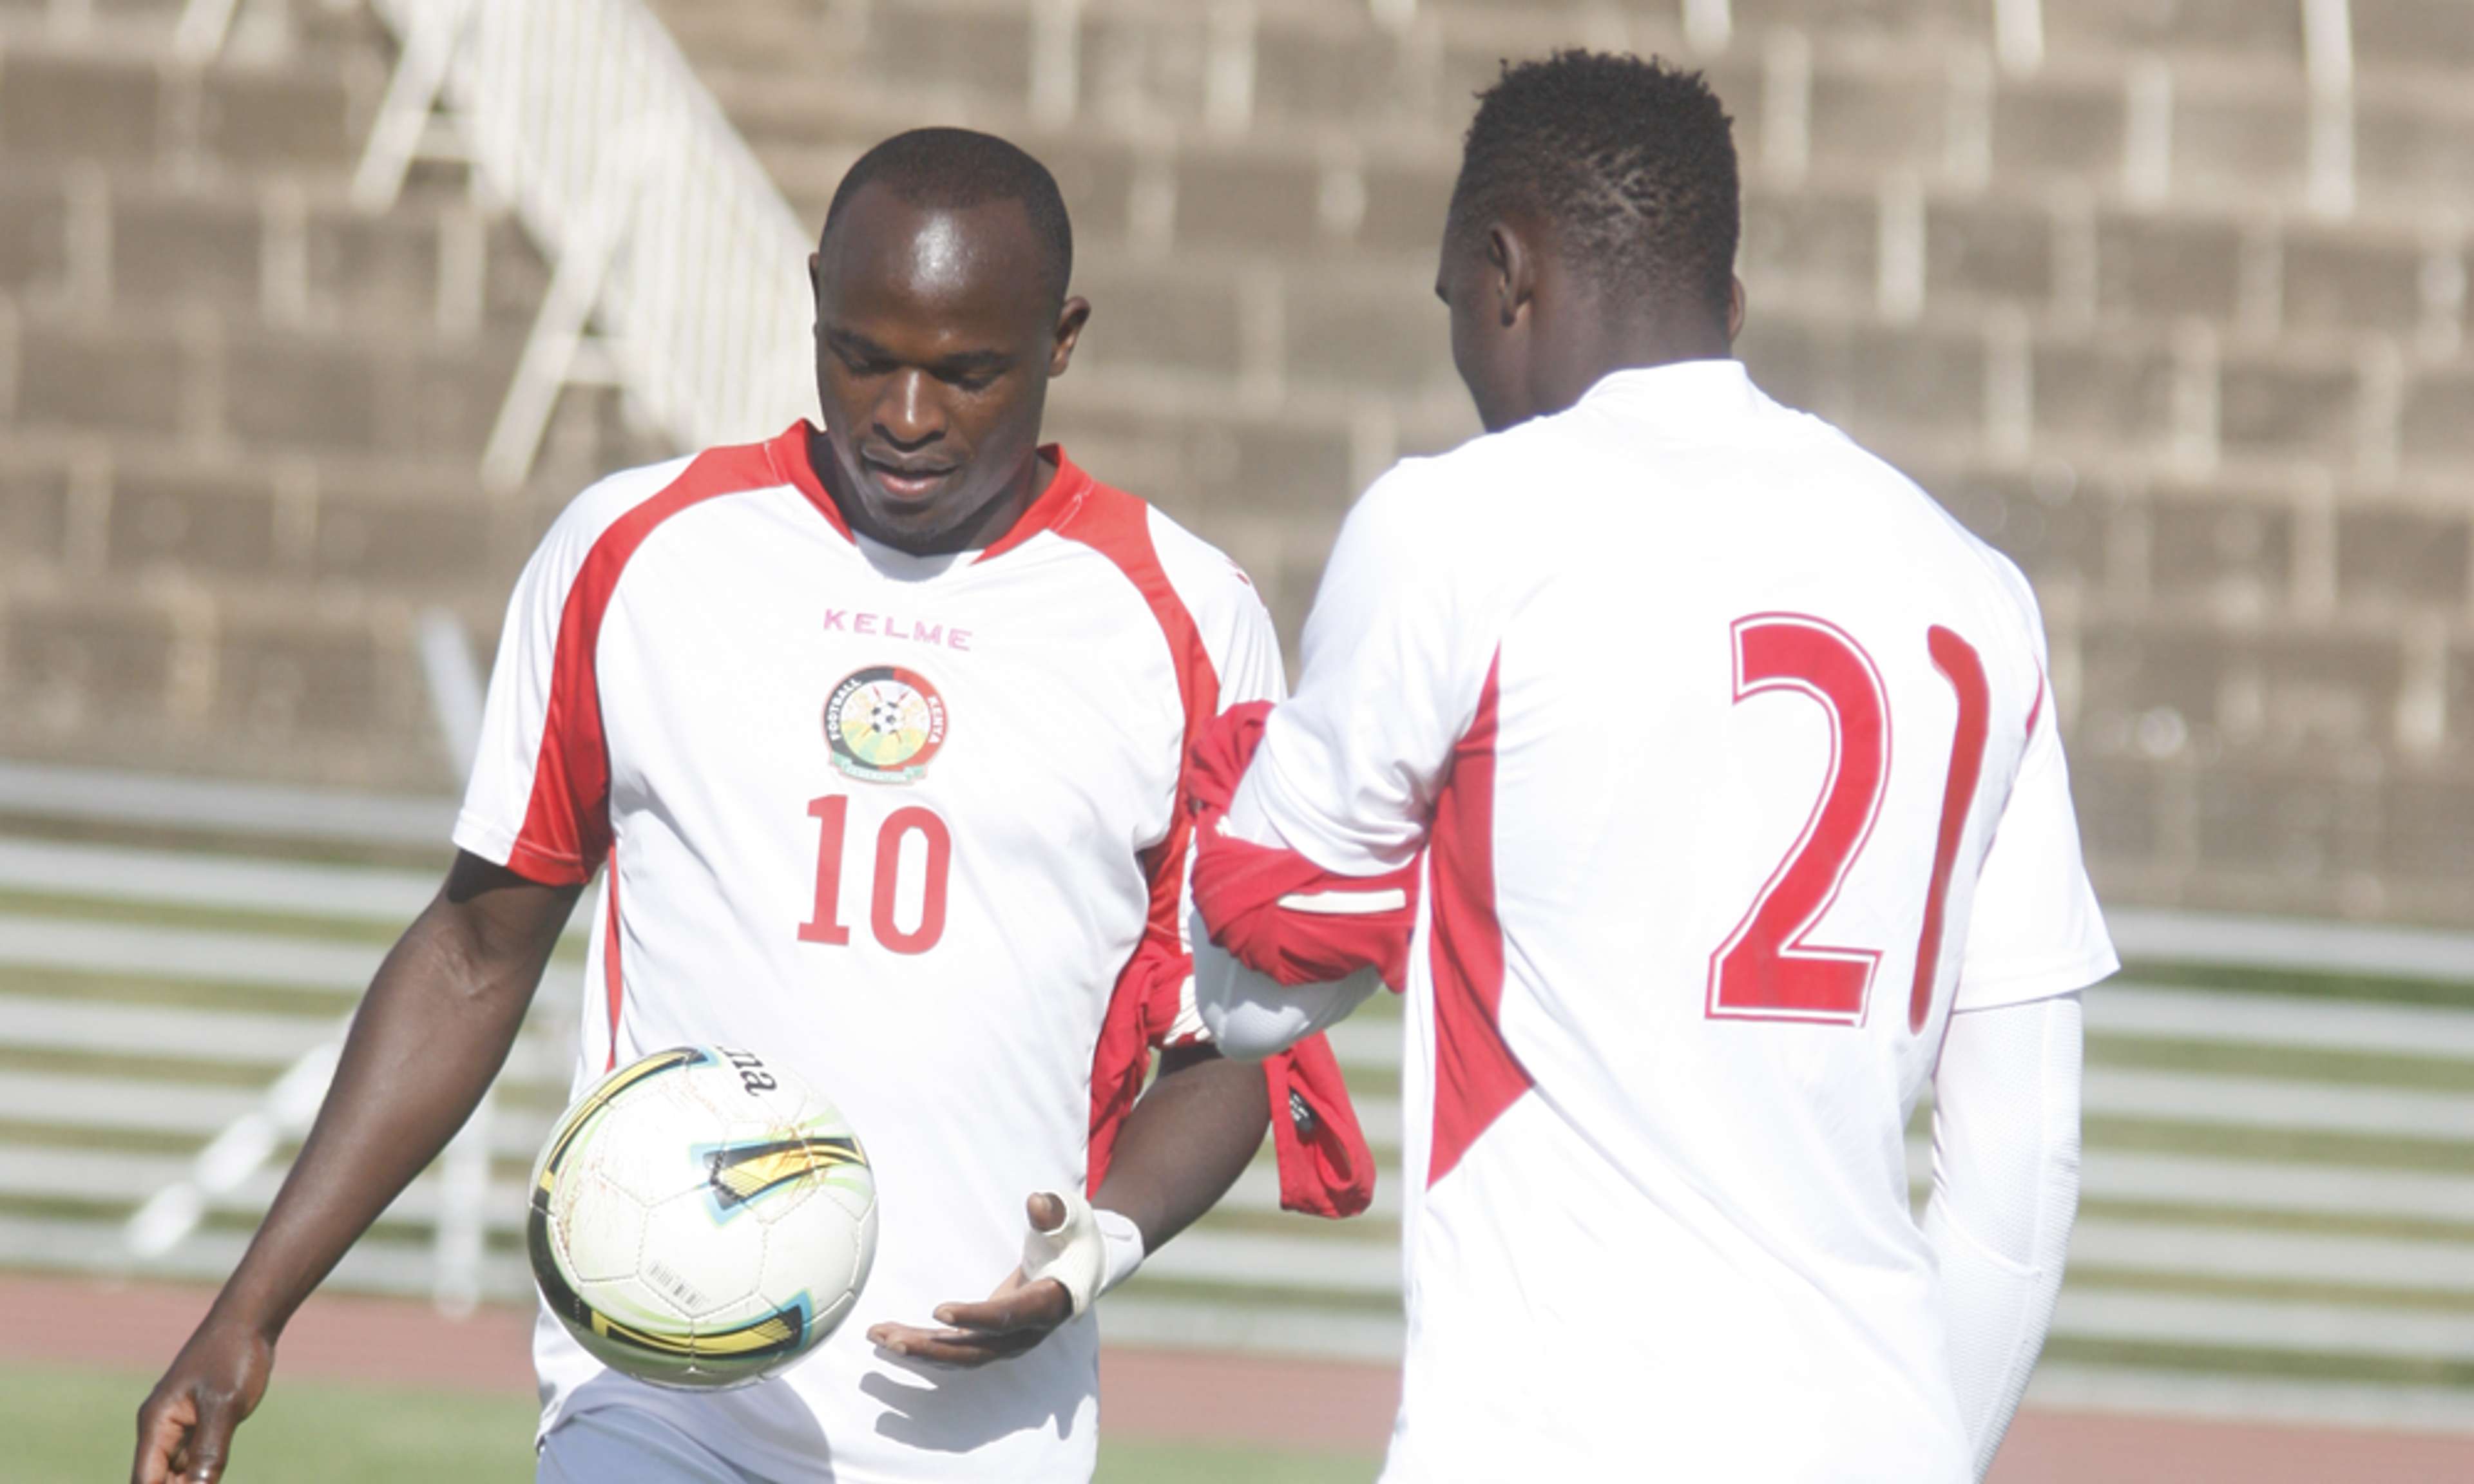 Kenya striker Dennis Oliech and Mariga